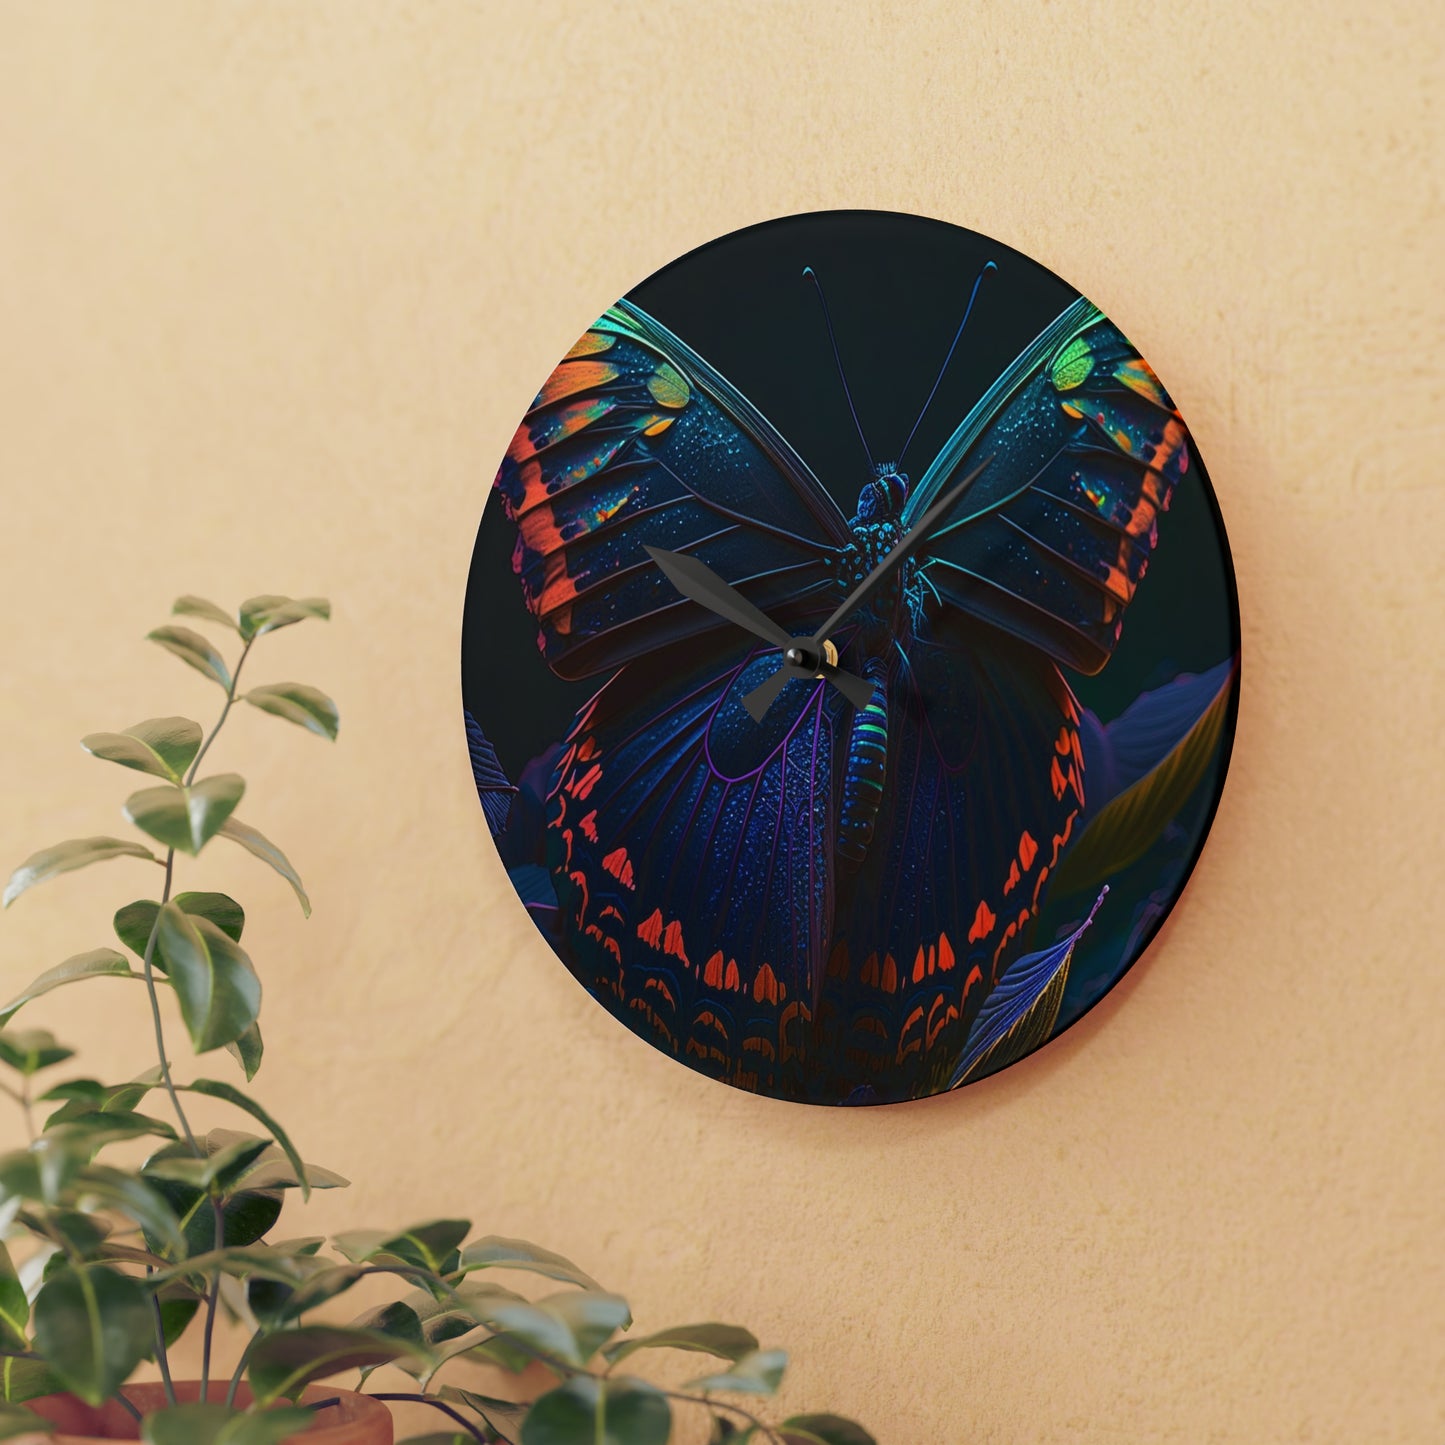 Acrylic Wall Clock Hue Neon Butterfly 3